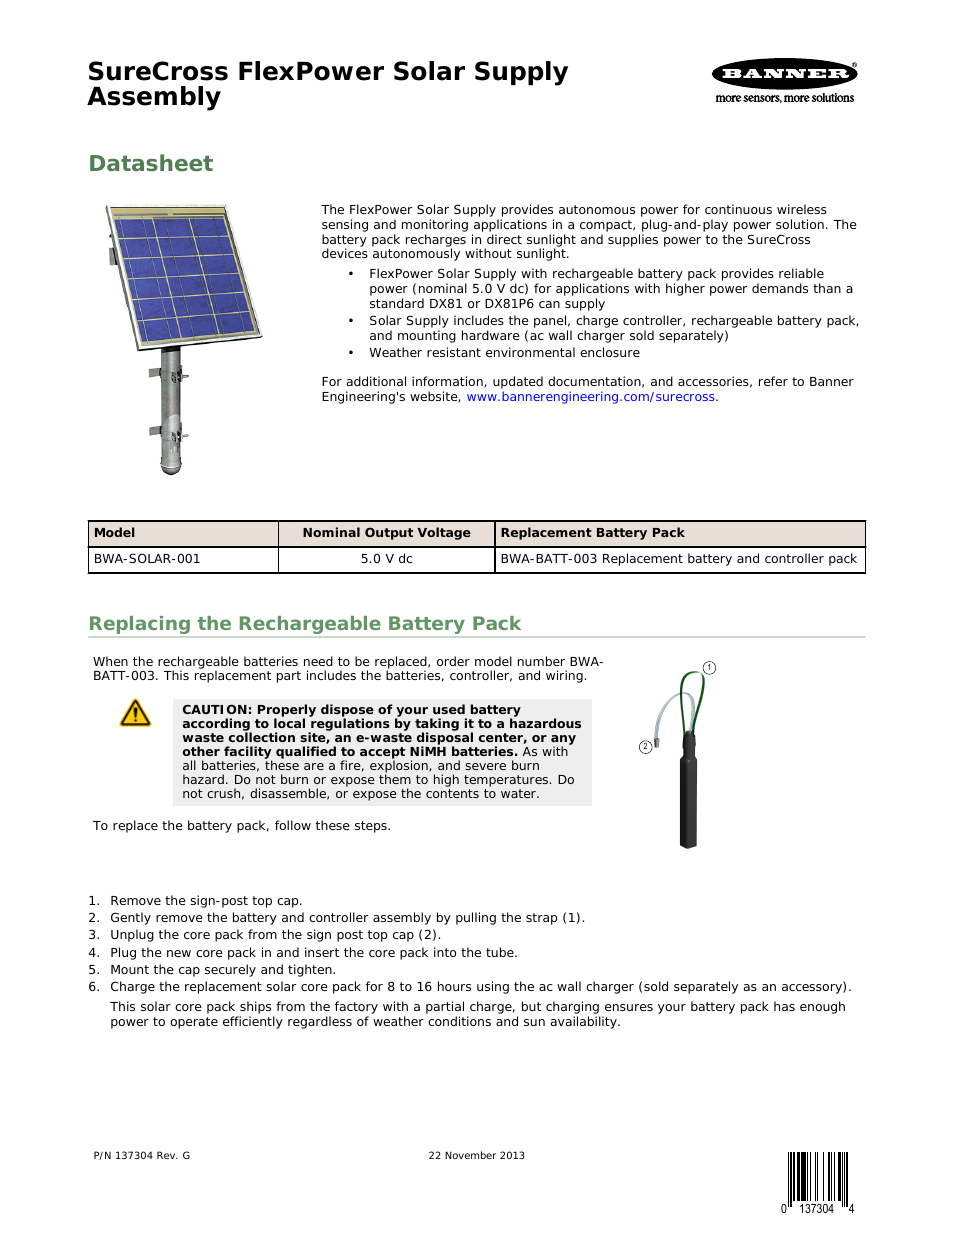 SureCross FlexPower Solar Supply Assembly